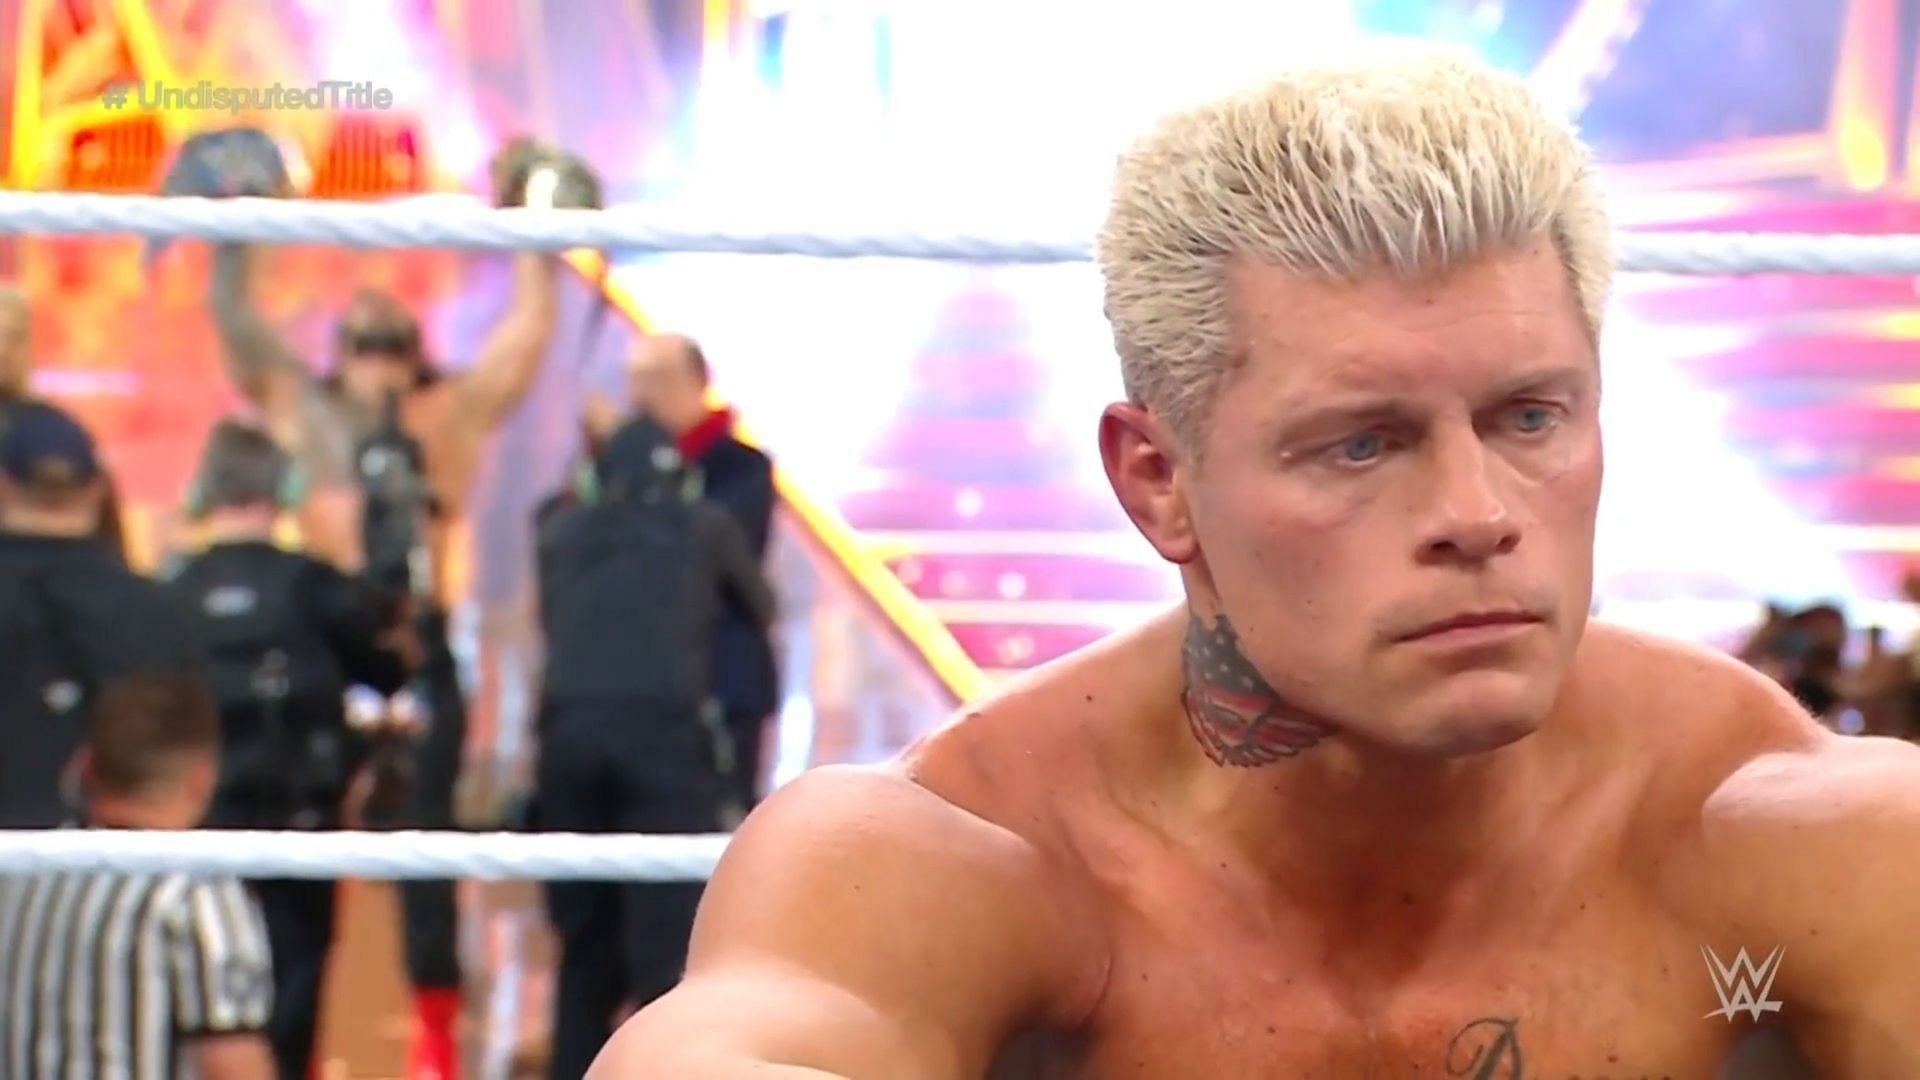 Will Cody Rhodes dethrone the Undisputed WWE Universal Champion Roman Reigns?